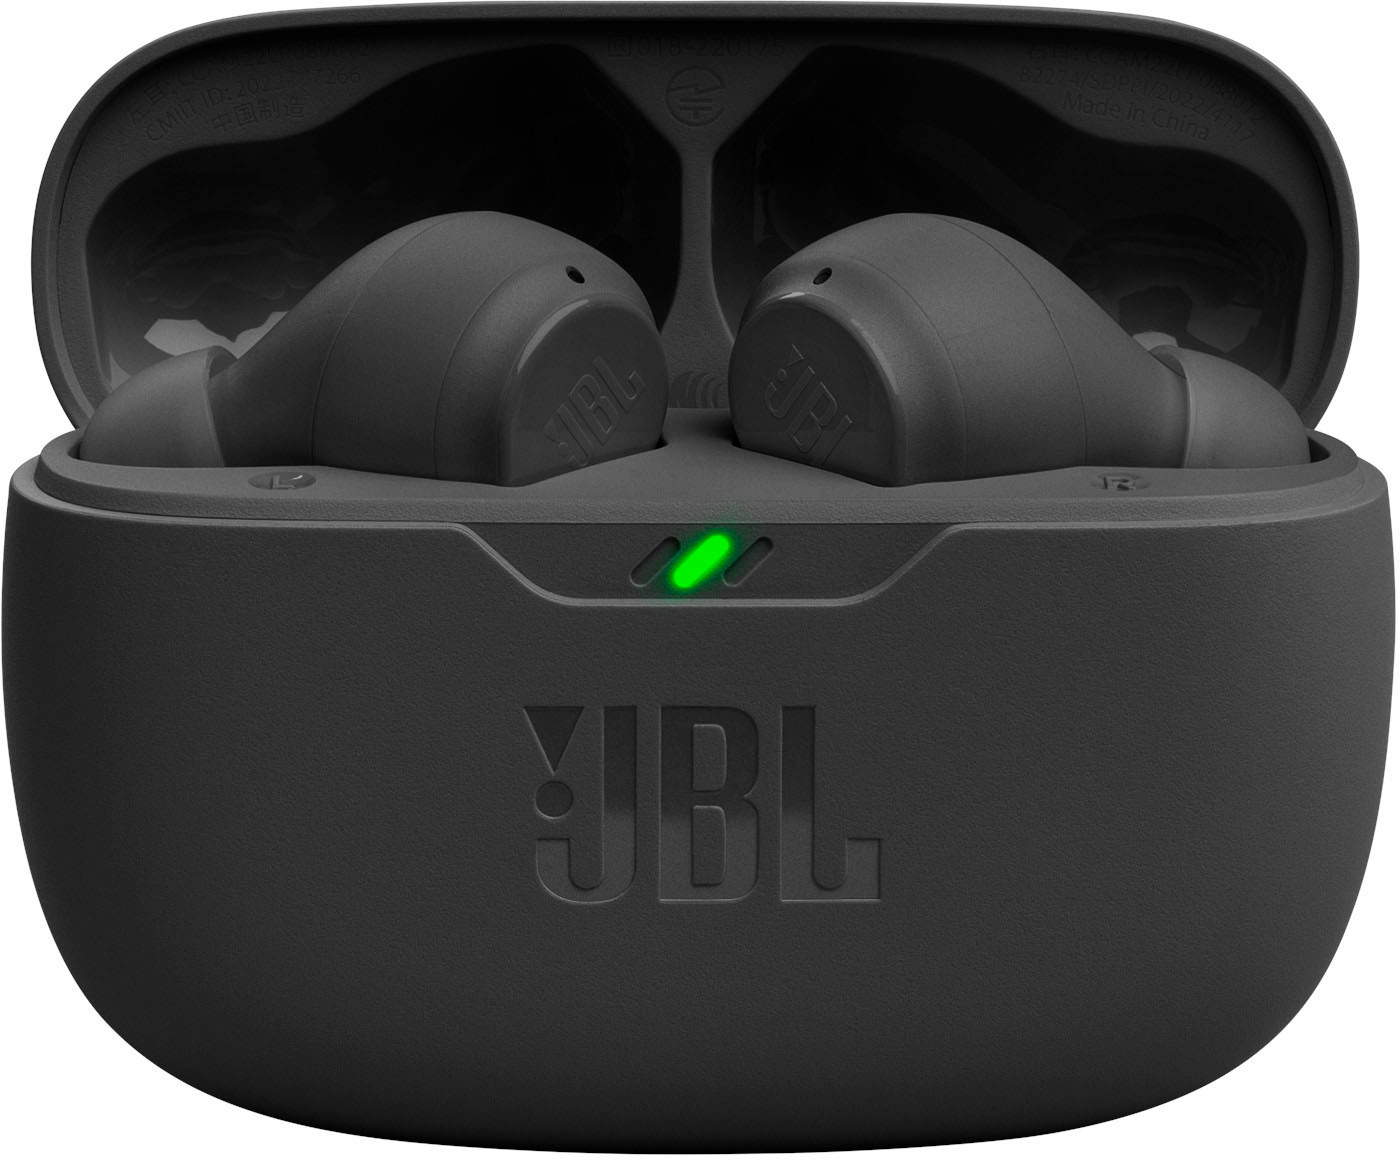 how-to-connect-jbl-wireless-earphones